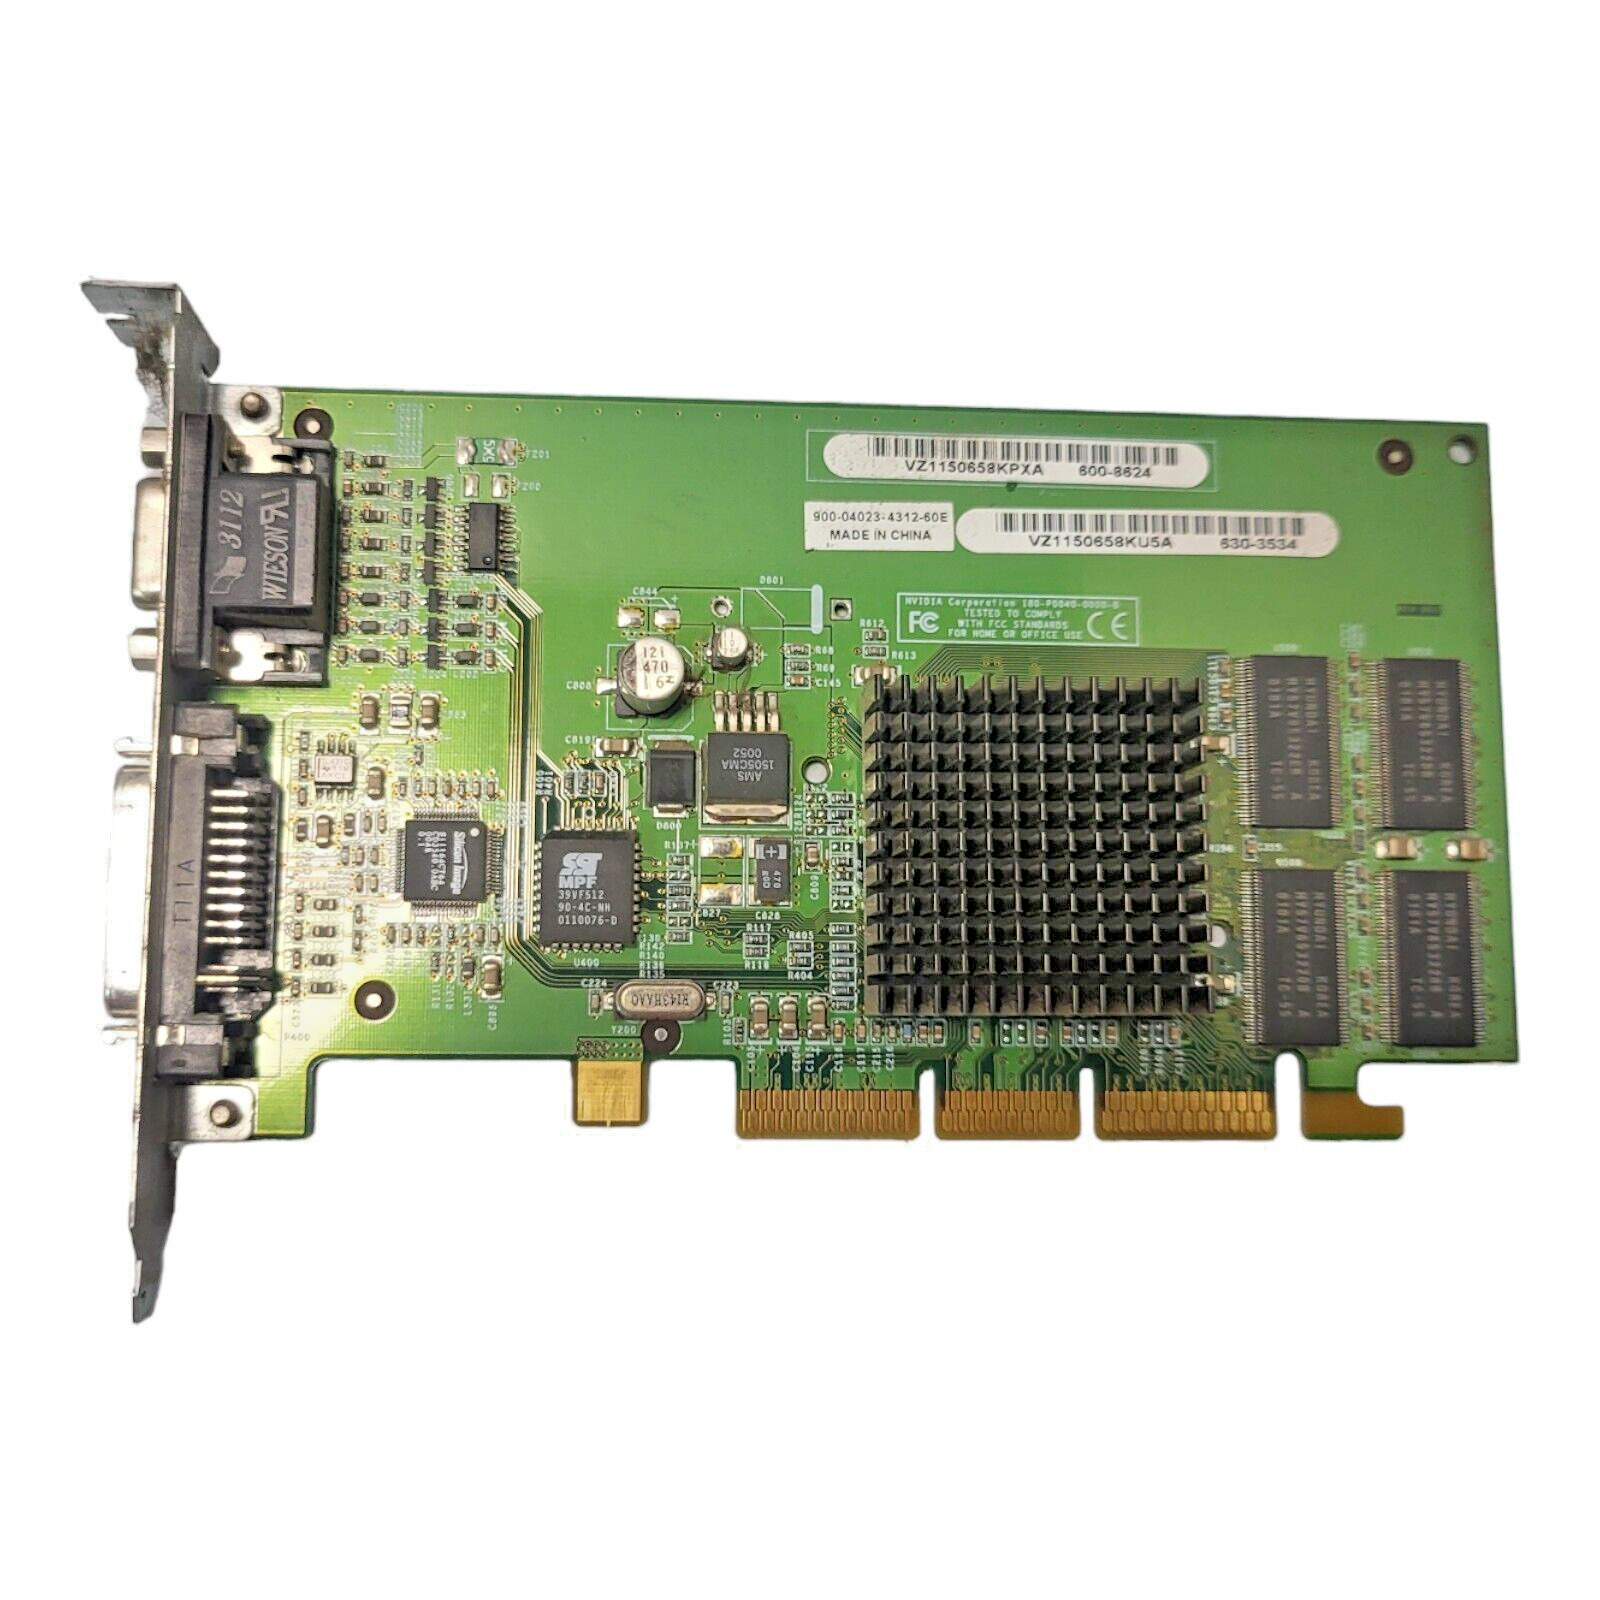 Nvidia 180-P0040-0000-B VGA/DVI 32MB AGP Video Graphics Card - TESTED